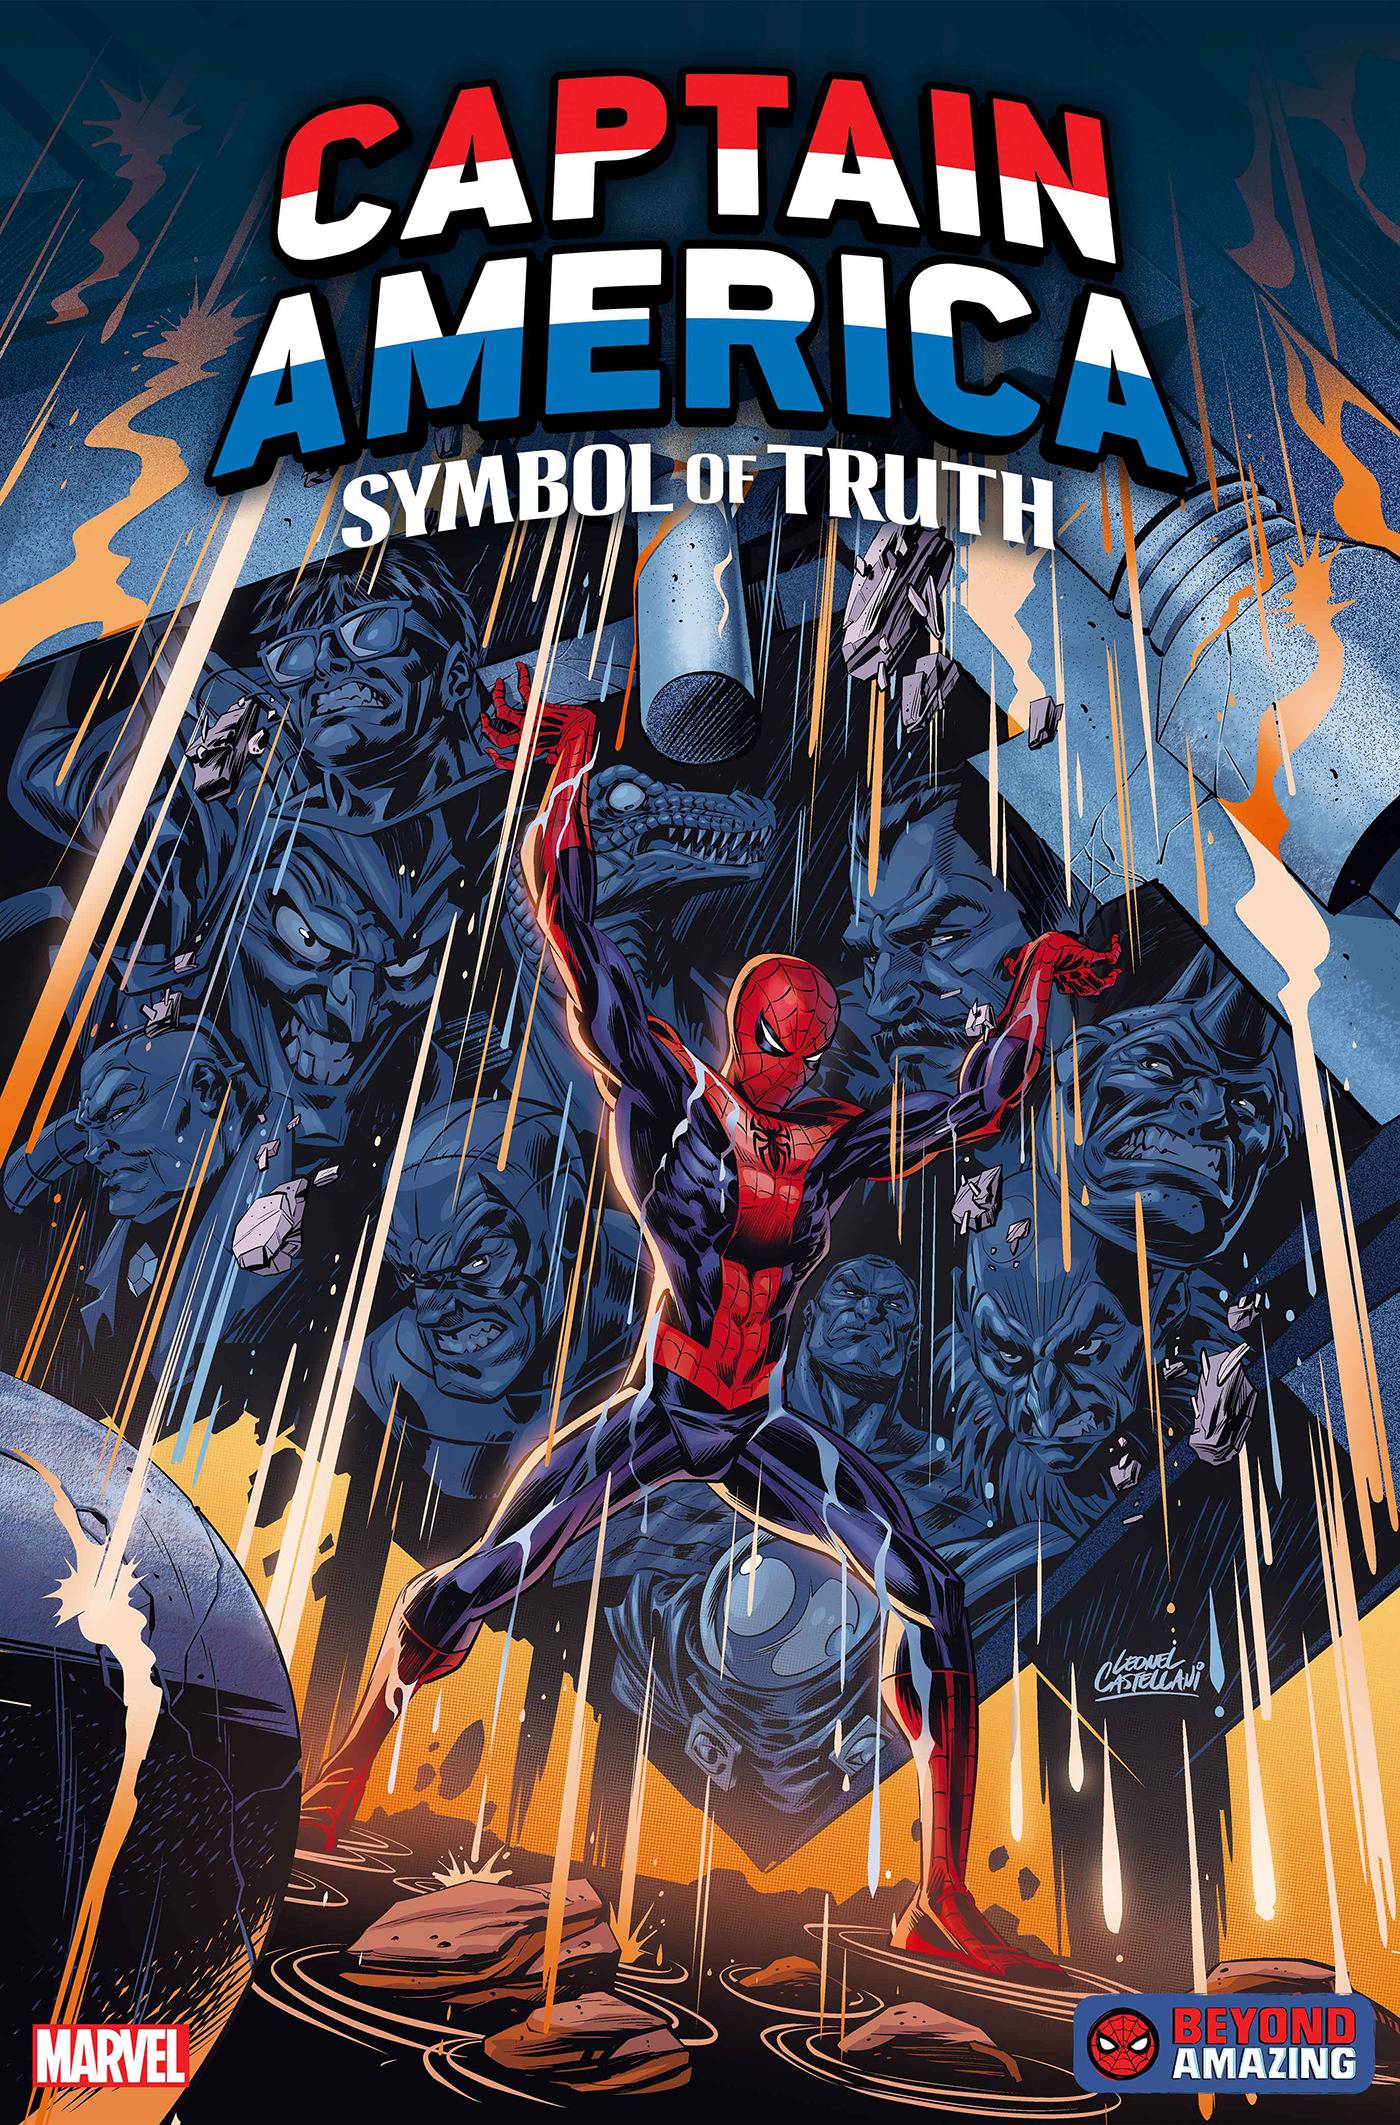 CAPTAIN AMERICA SYMBOL OF TRUTH #4 BEYOND AMAZING SPIDER-MAN